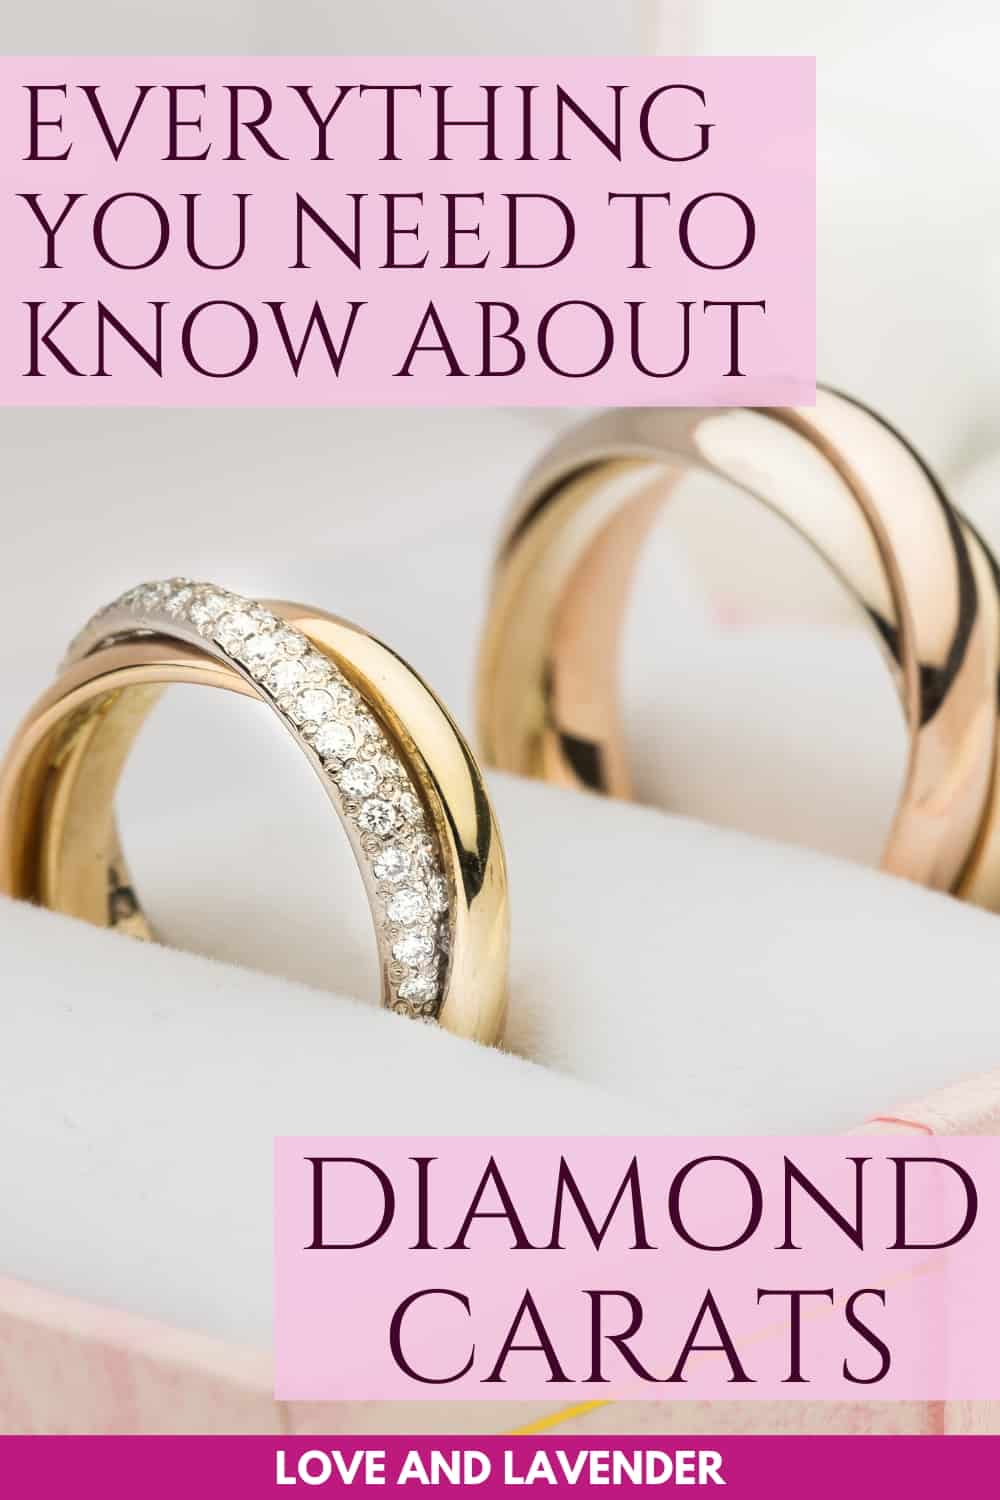 pinterest pin -diamond carats